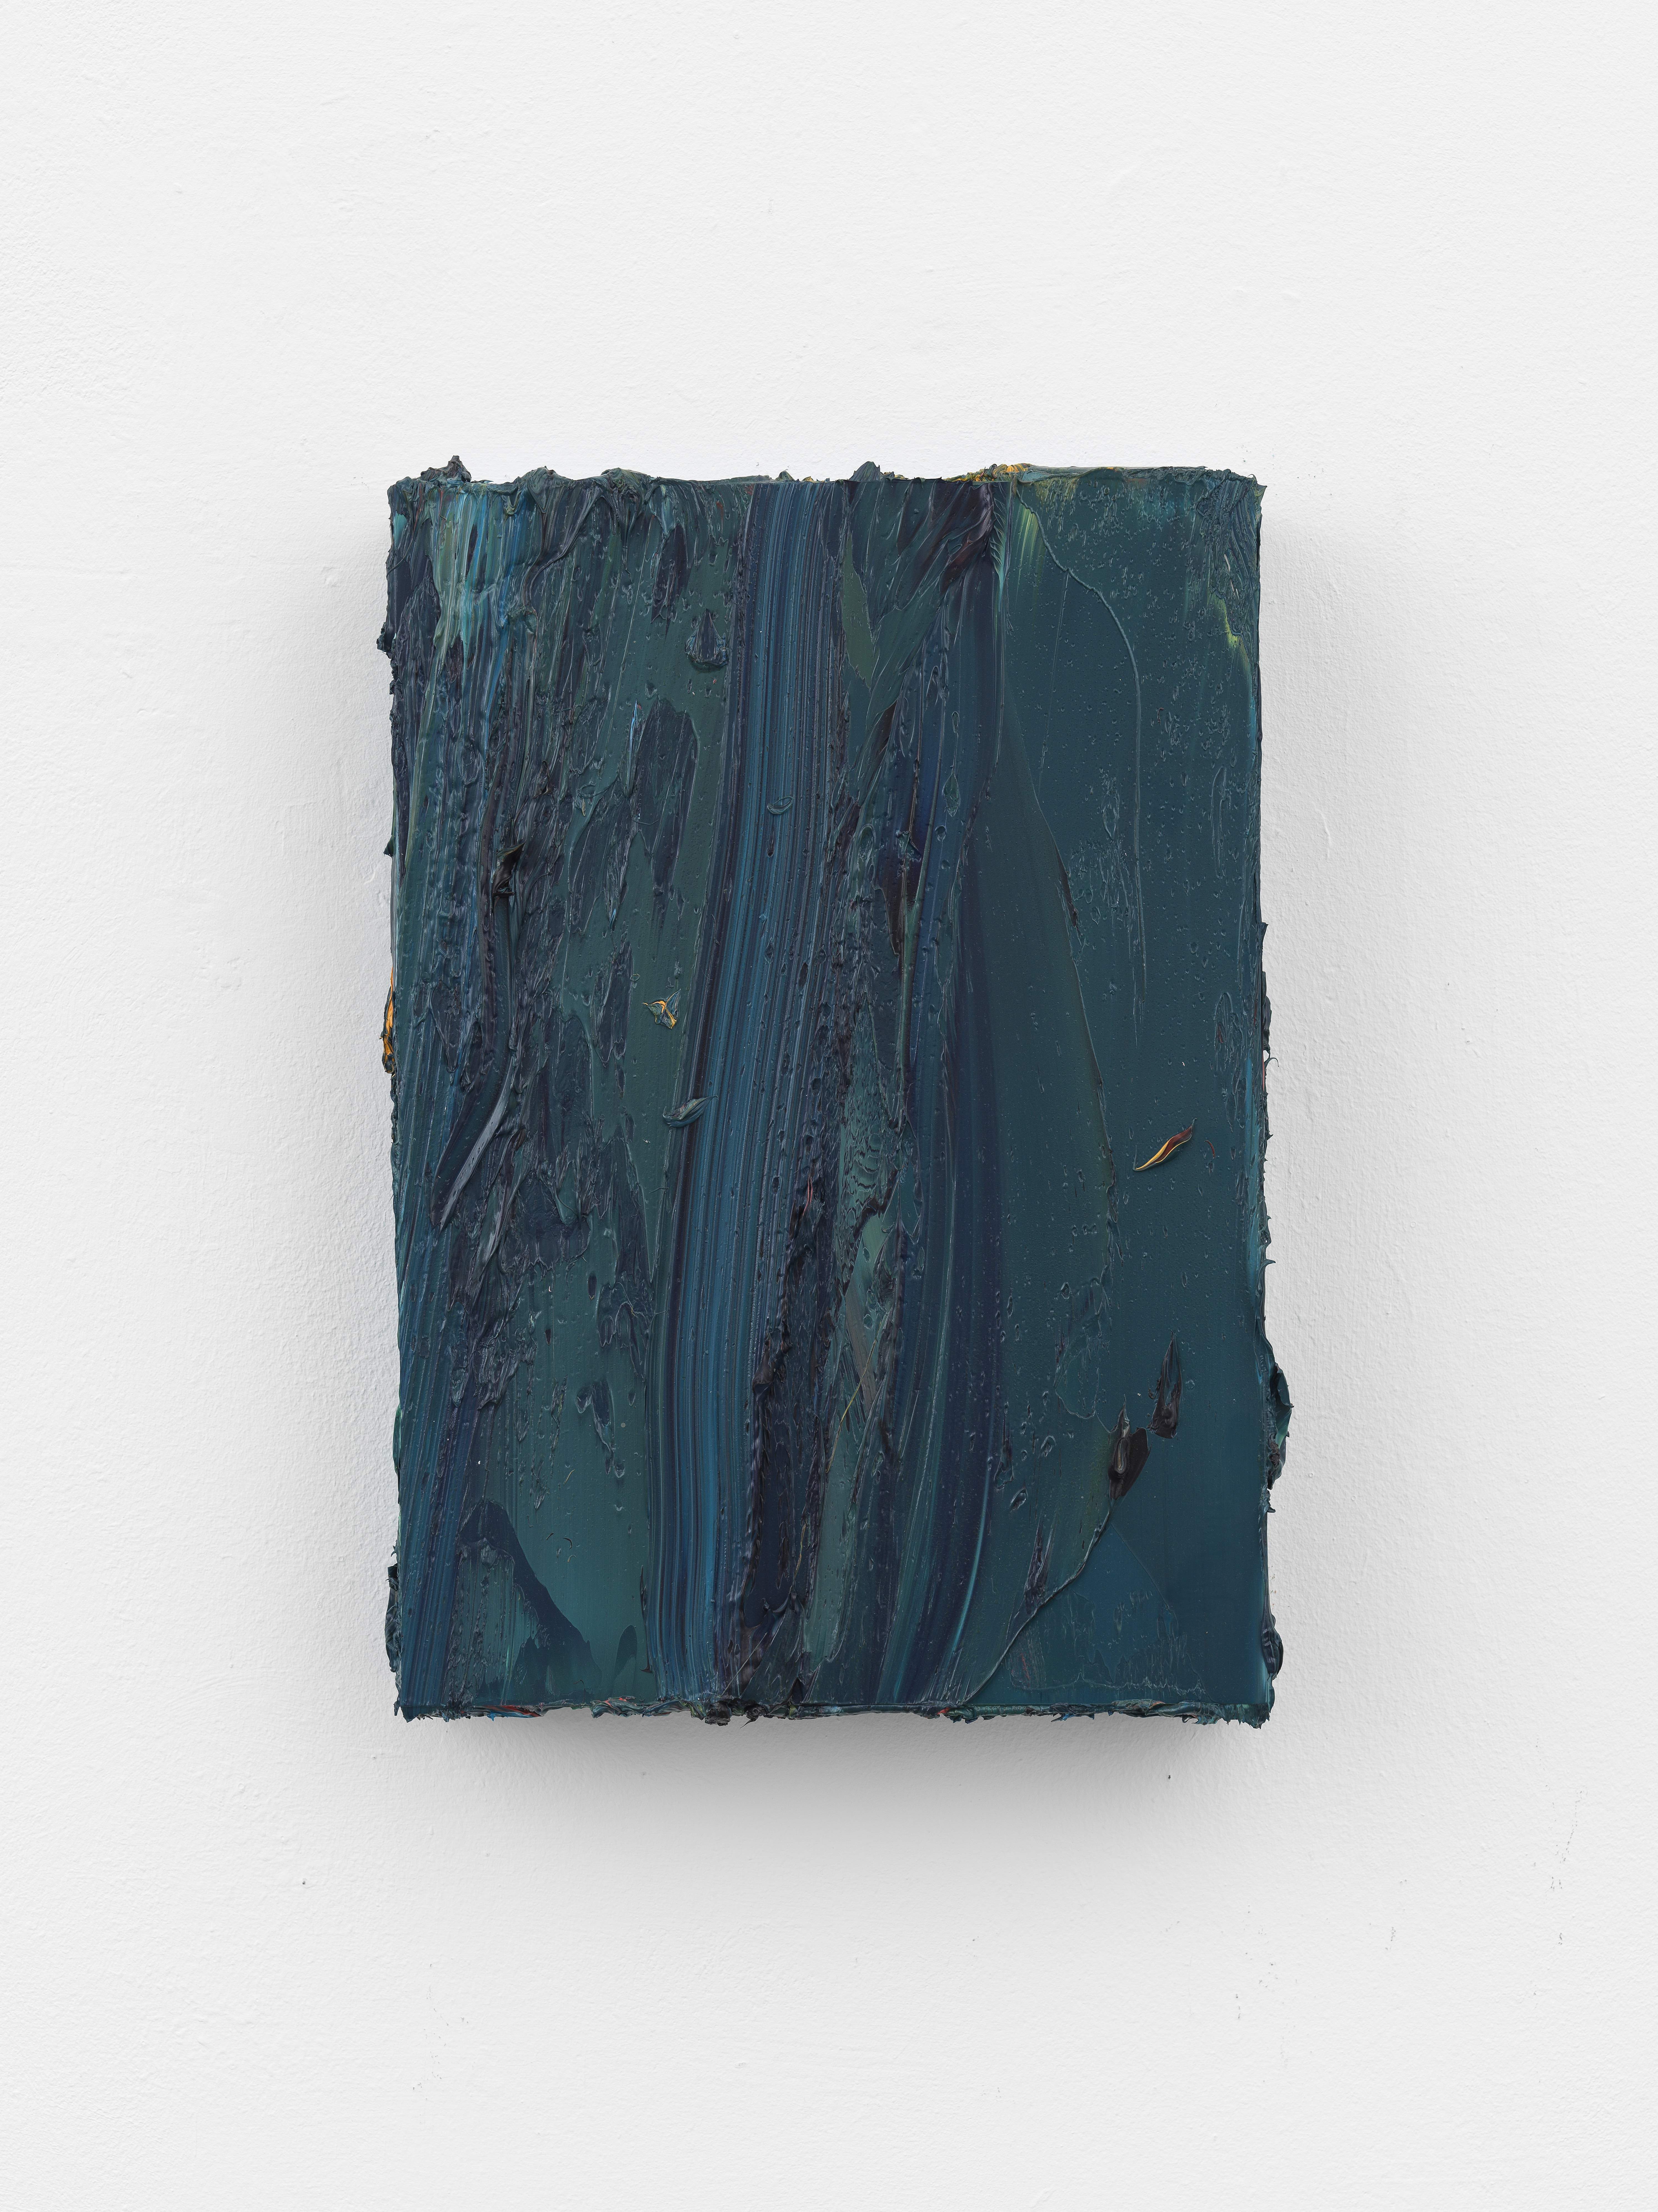 (Torquoise green deep/Caribbean blue) II, 2020, Oil on aluminium, 48 x 34 x 8 cm